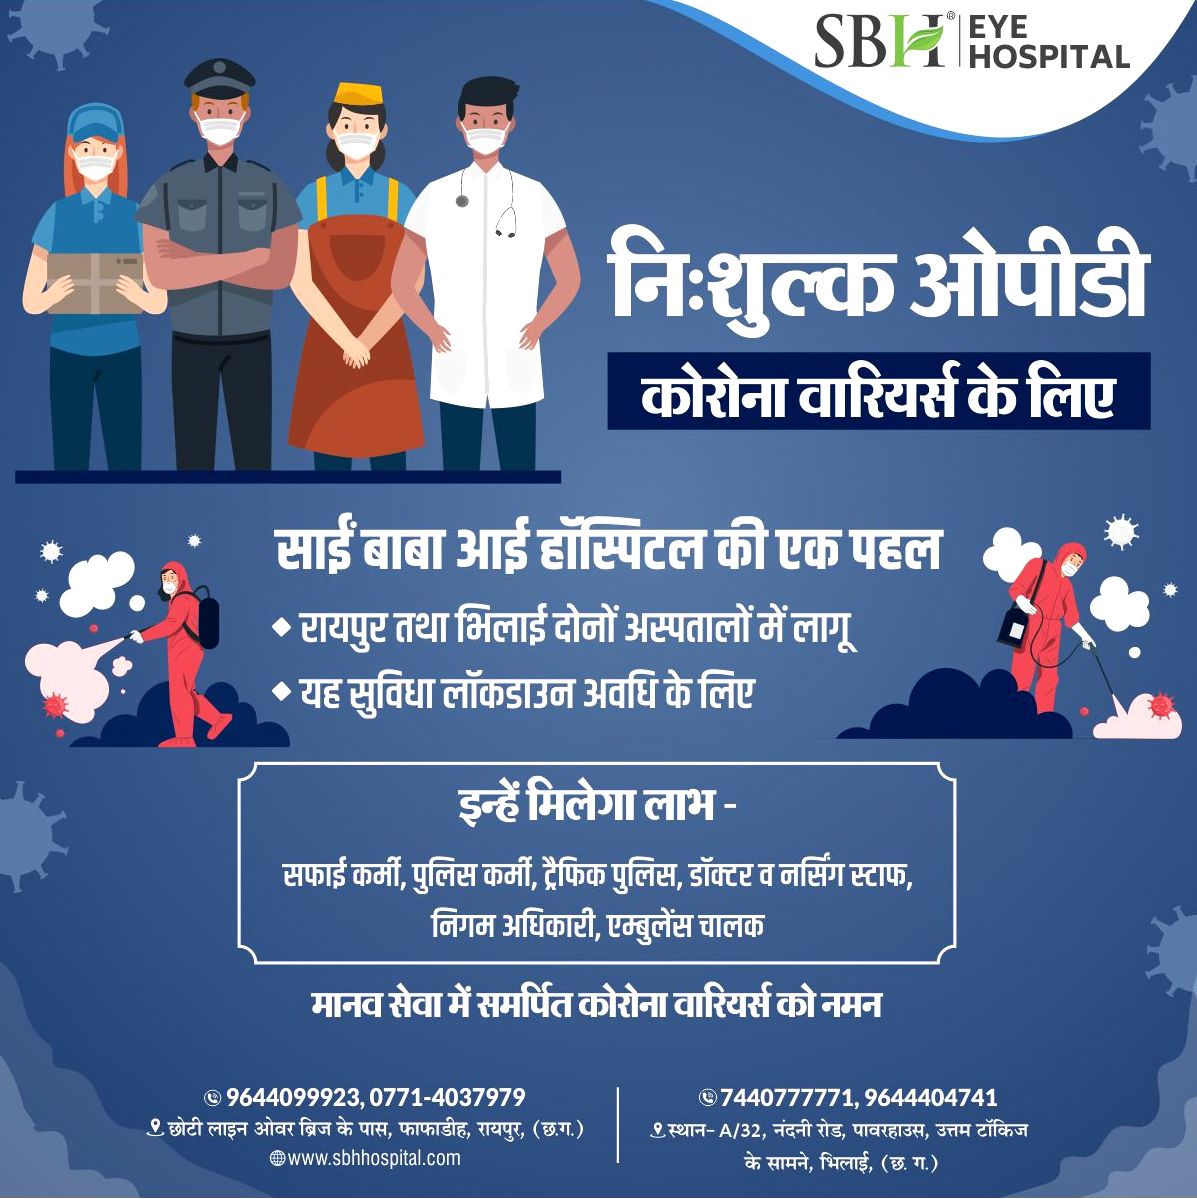 Sai Baba Eye Hospital Medical Services | Hospitals